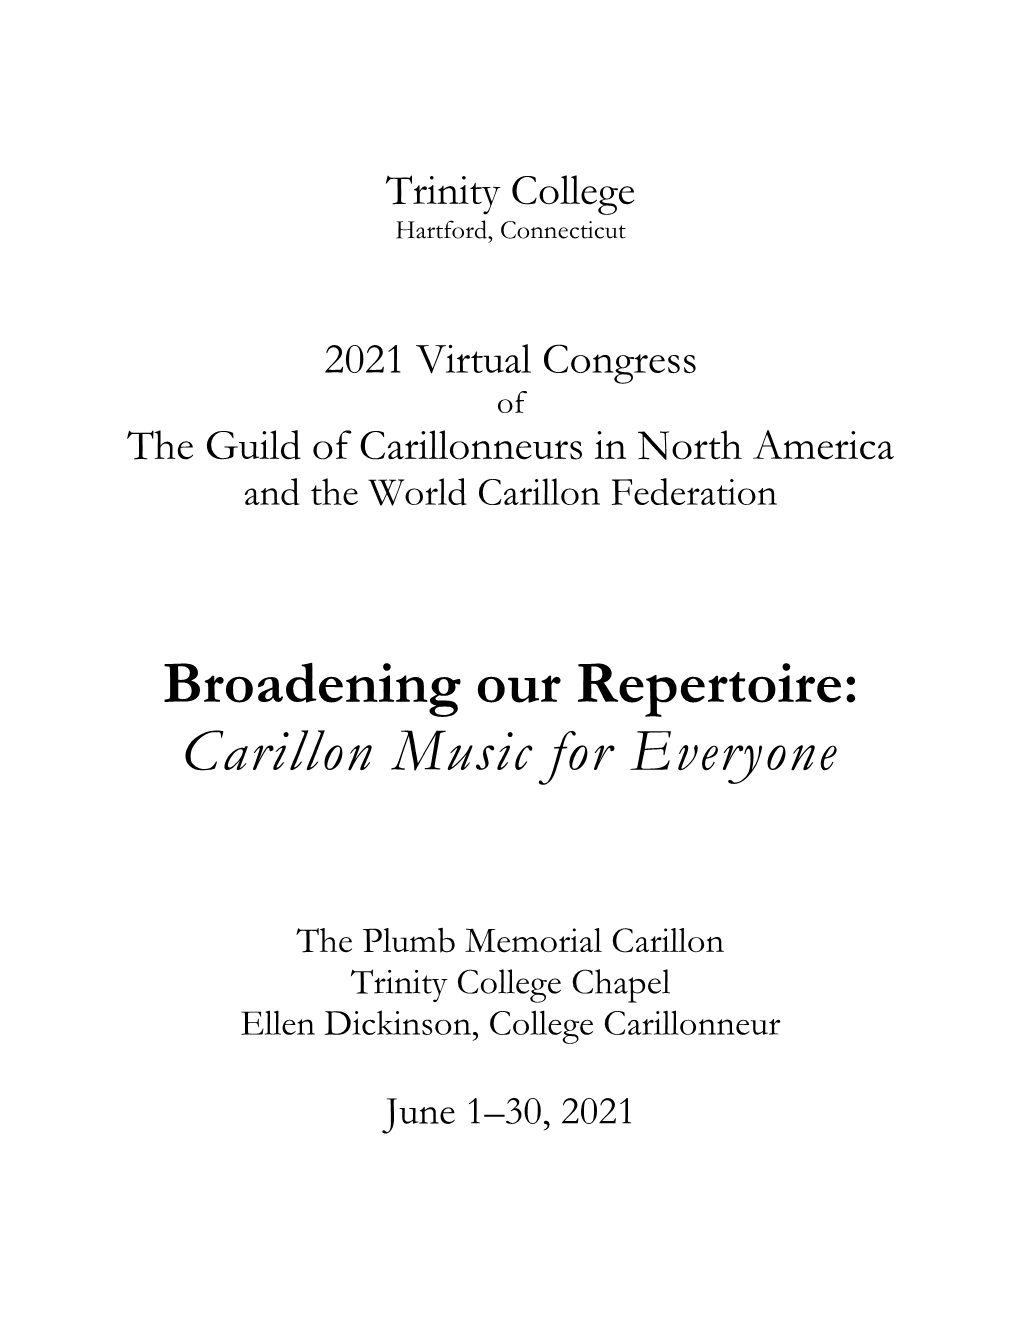 Broadening Our Repertoire: Carillon Music for Everyone